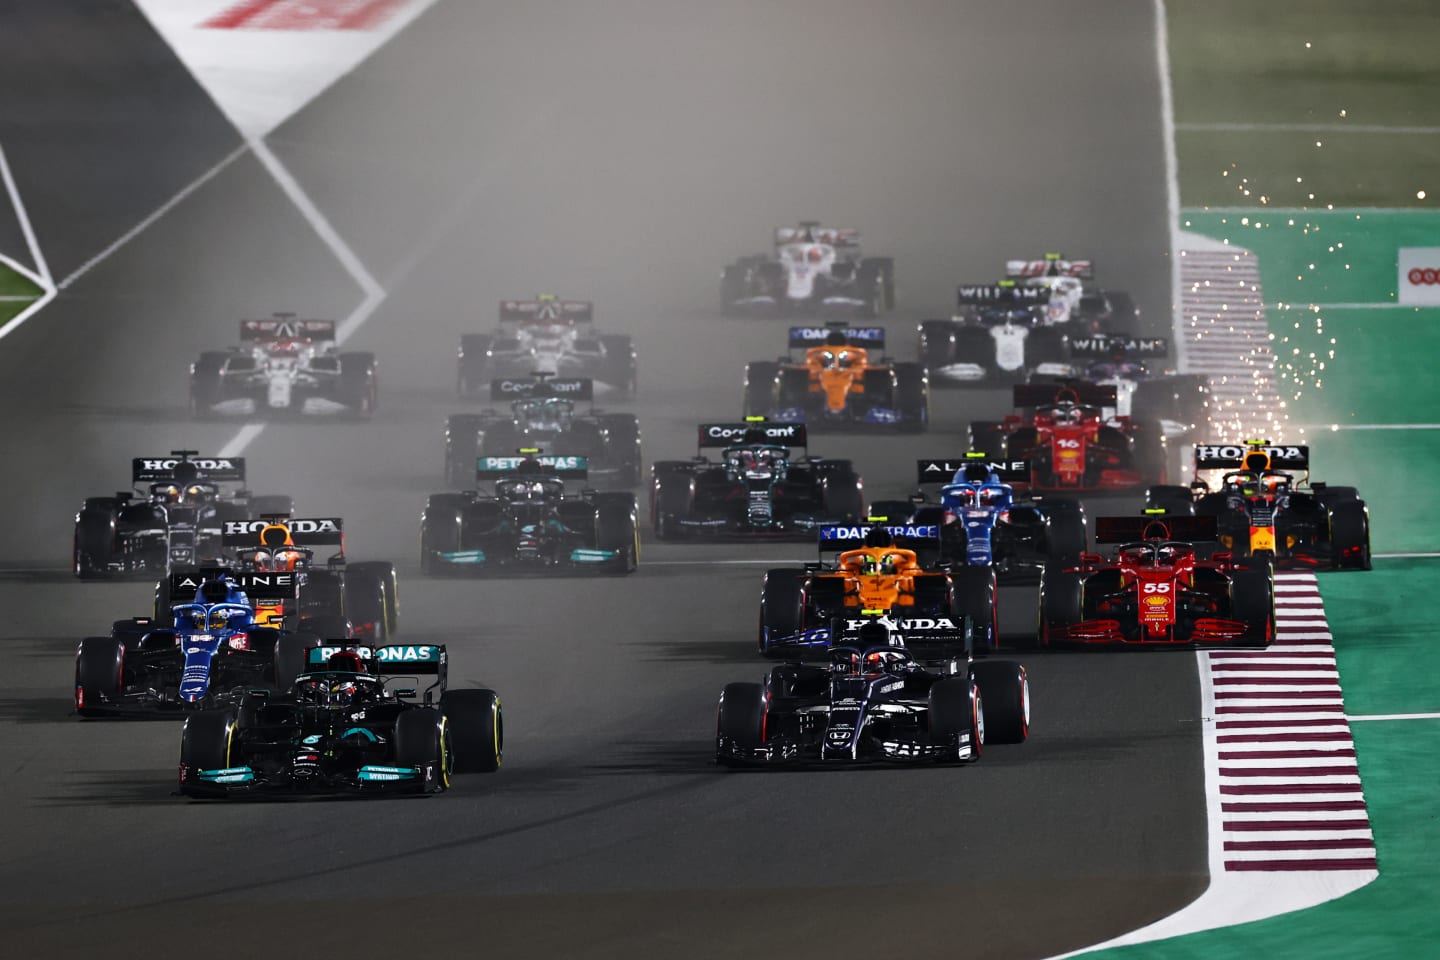 DOHA, QATAR - NOVEMBER 21: Lewis Hamilton of Great Britain driving the (44) Mercedes AMG Petronas